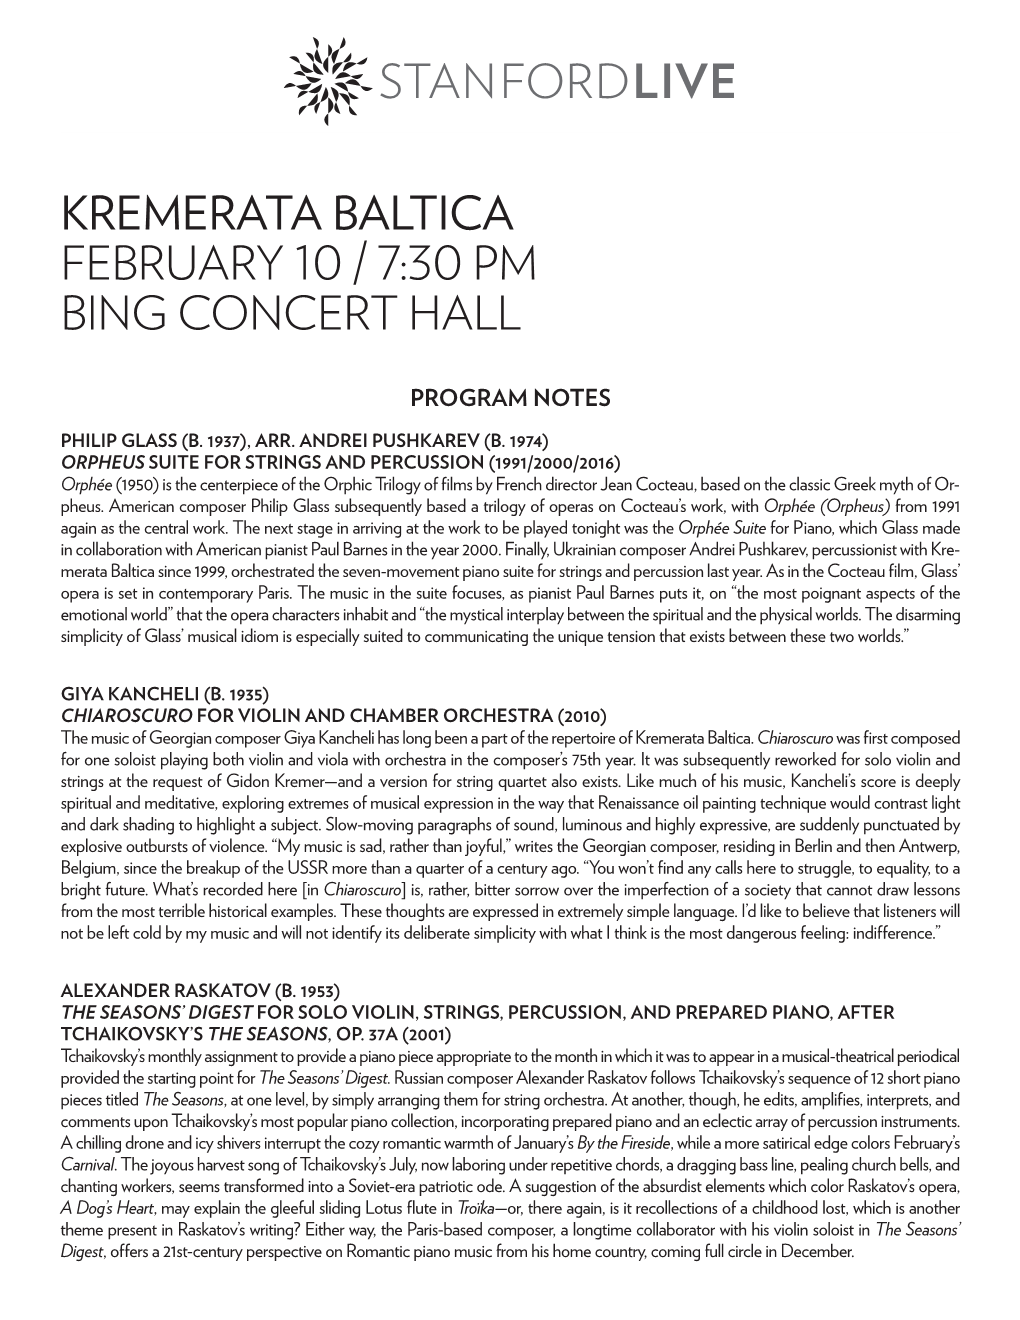 Kremerata Baltica February   : Pm Bing Concert Hall